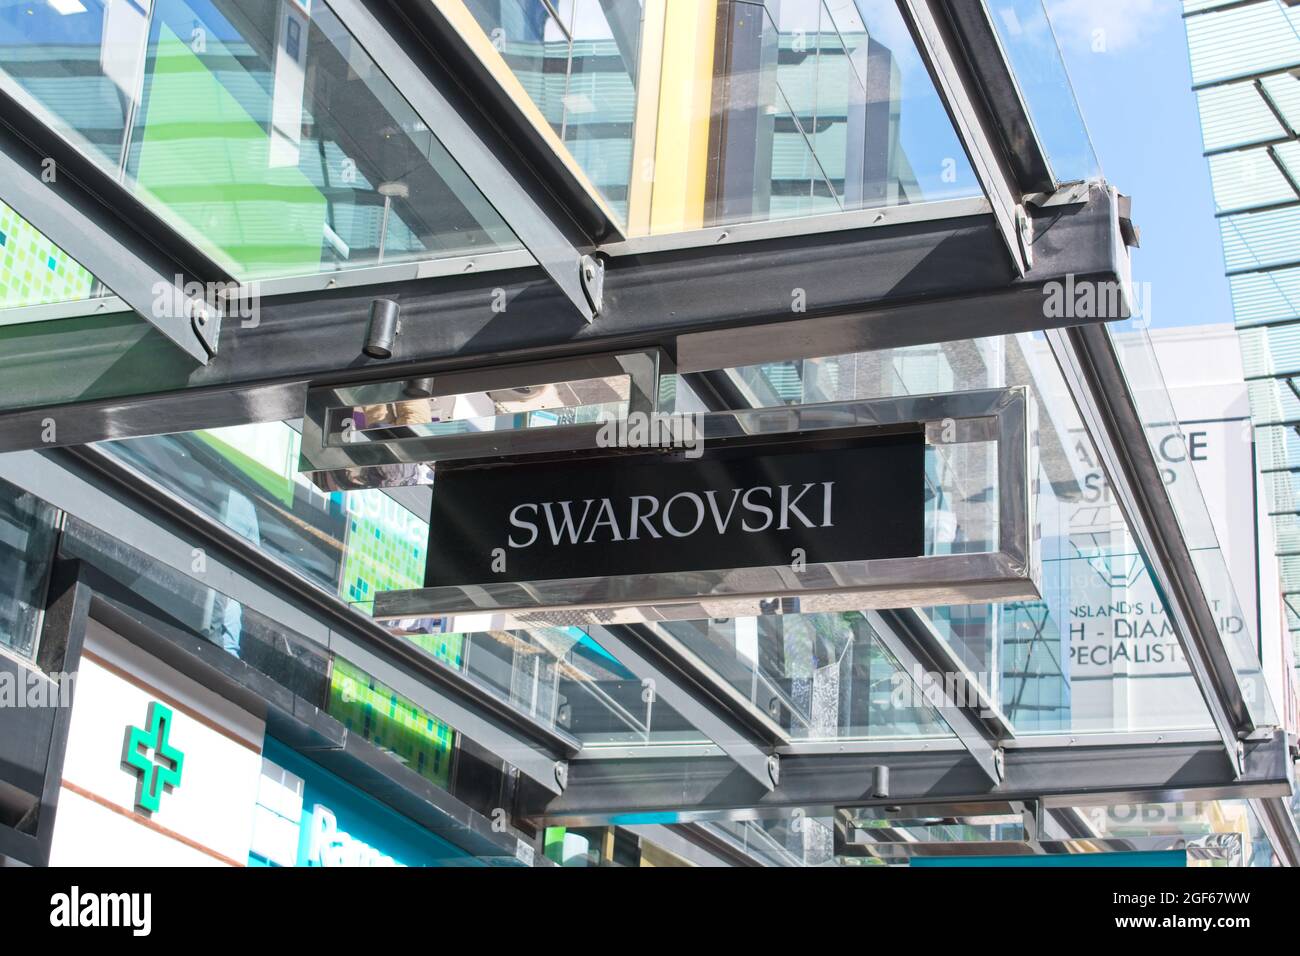 Swarovski jewellery shop in Brisbane Stock Photo - Alamy